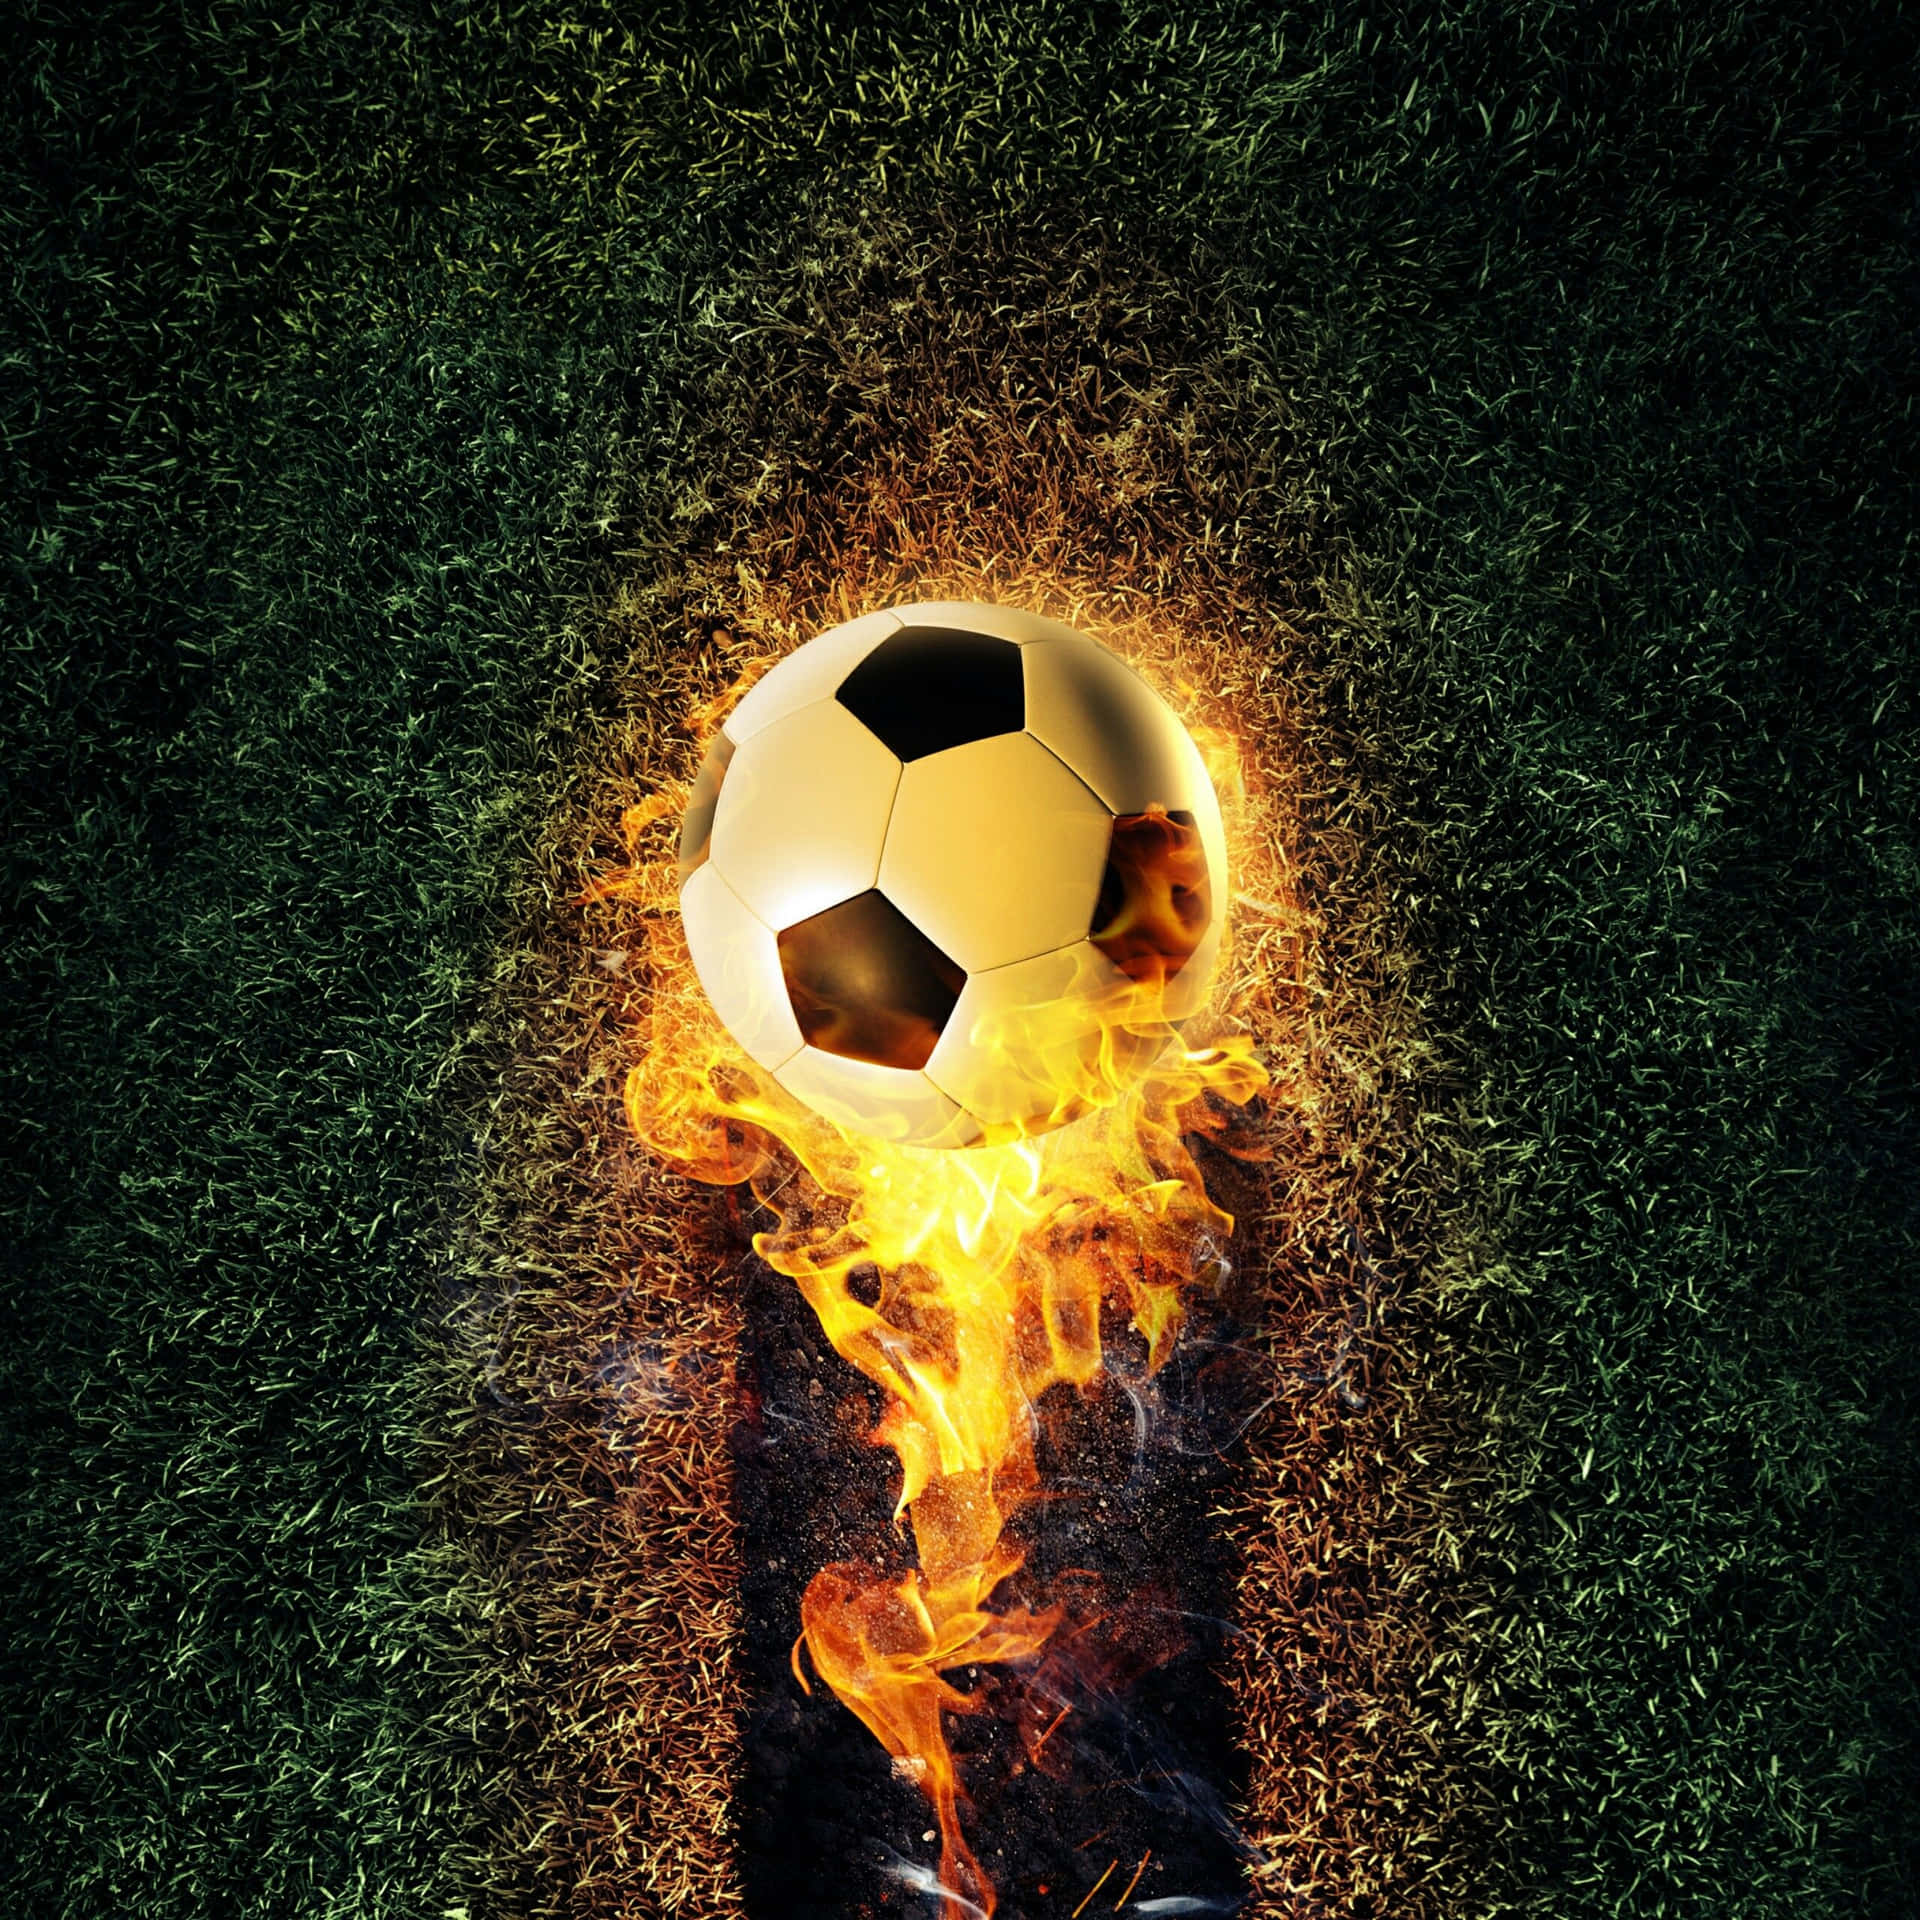 Cool Fire Backgrounds  Wallpaper Cave  Soccer ball Soccer balls Soccer